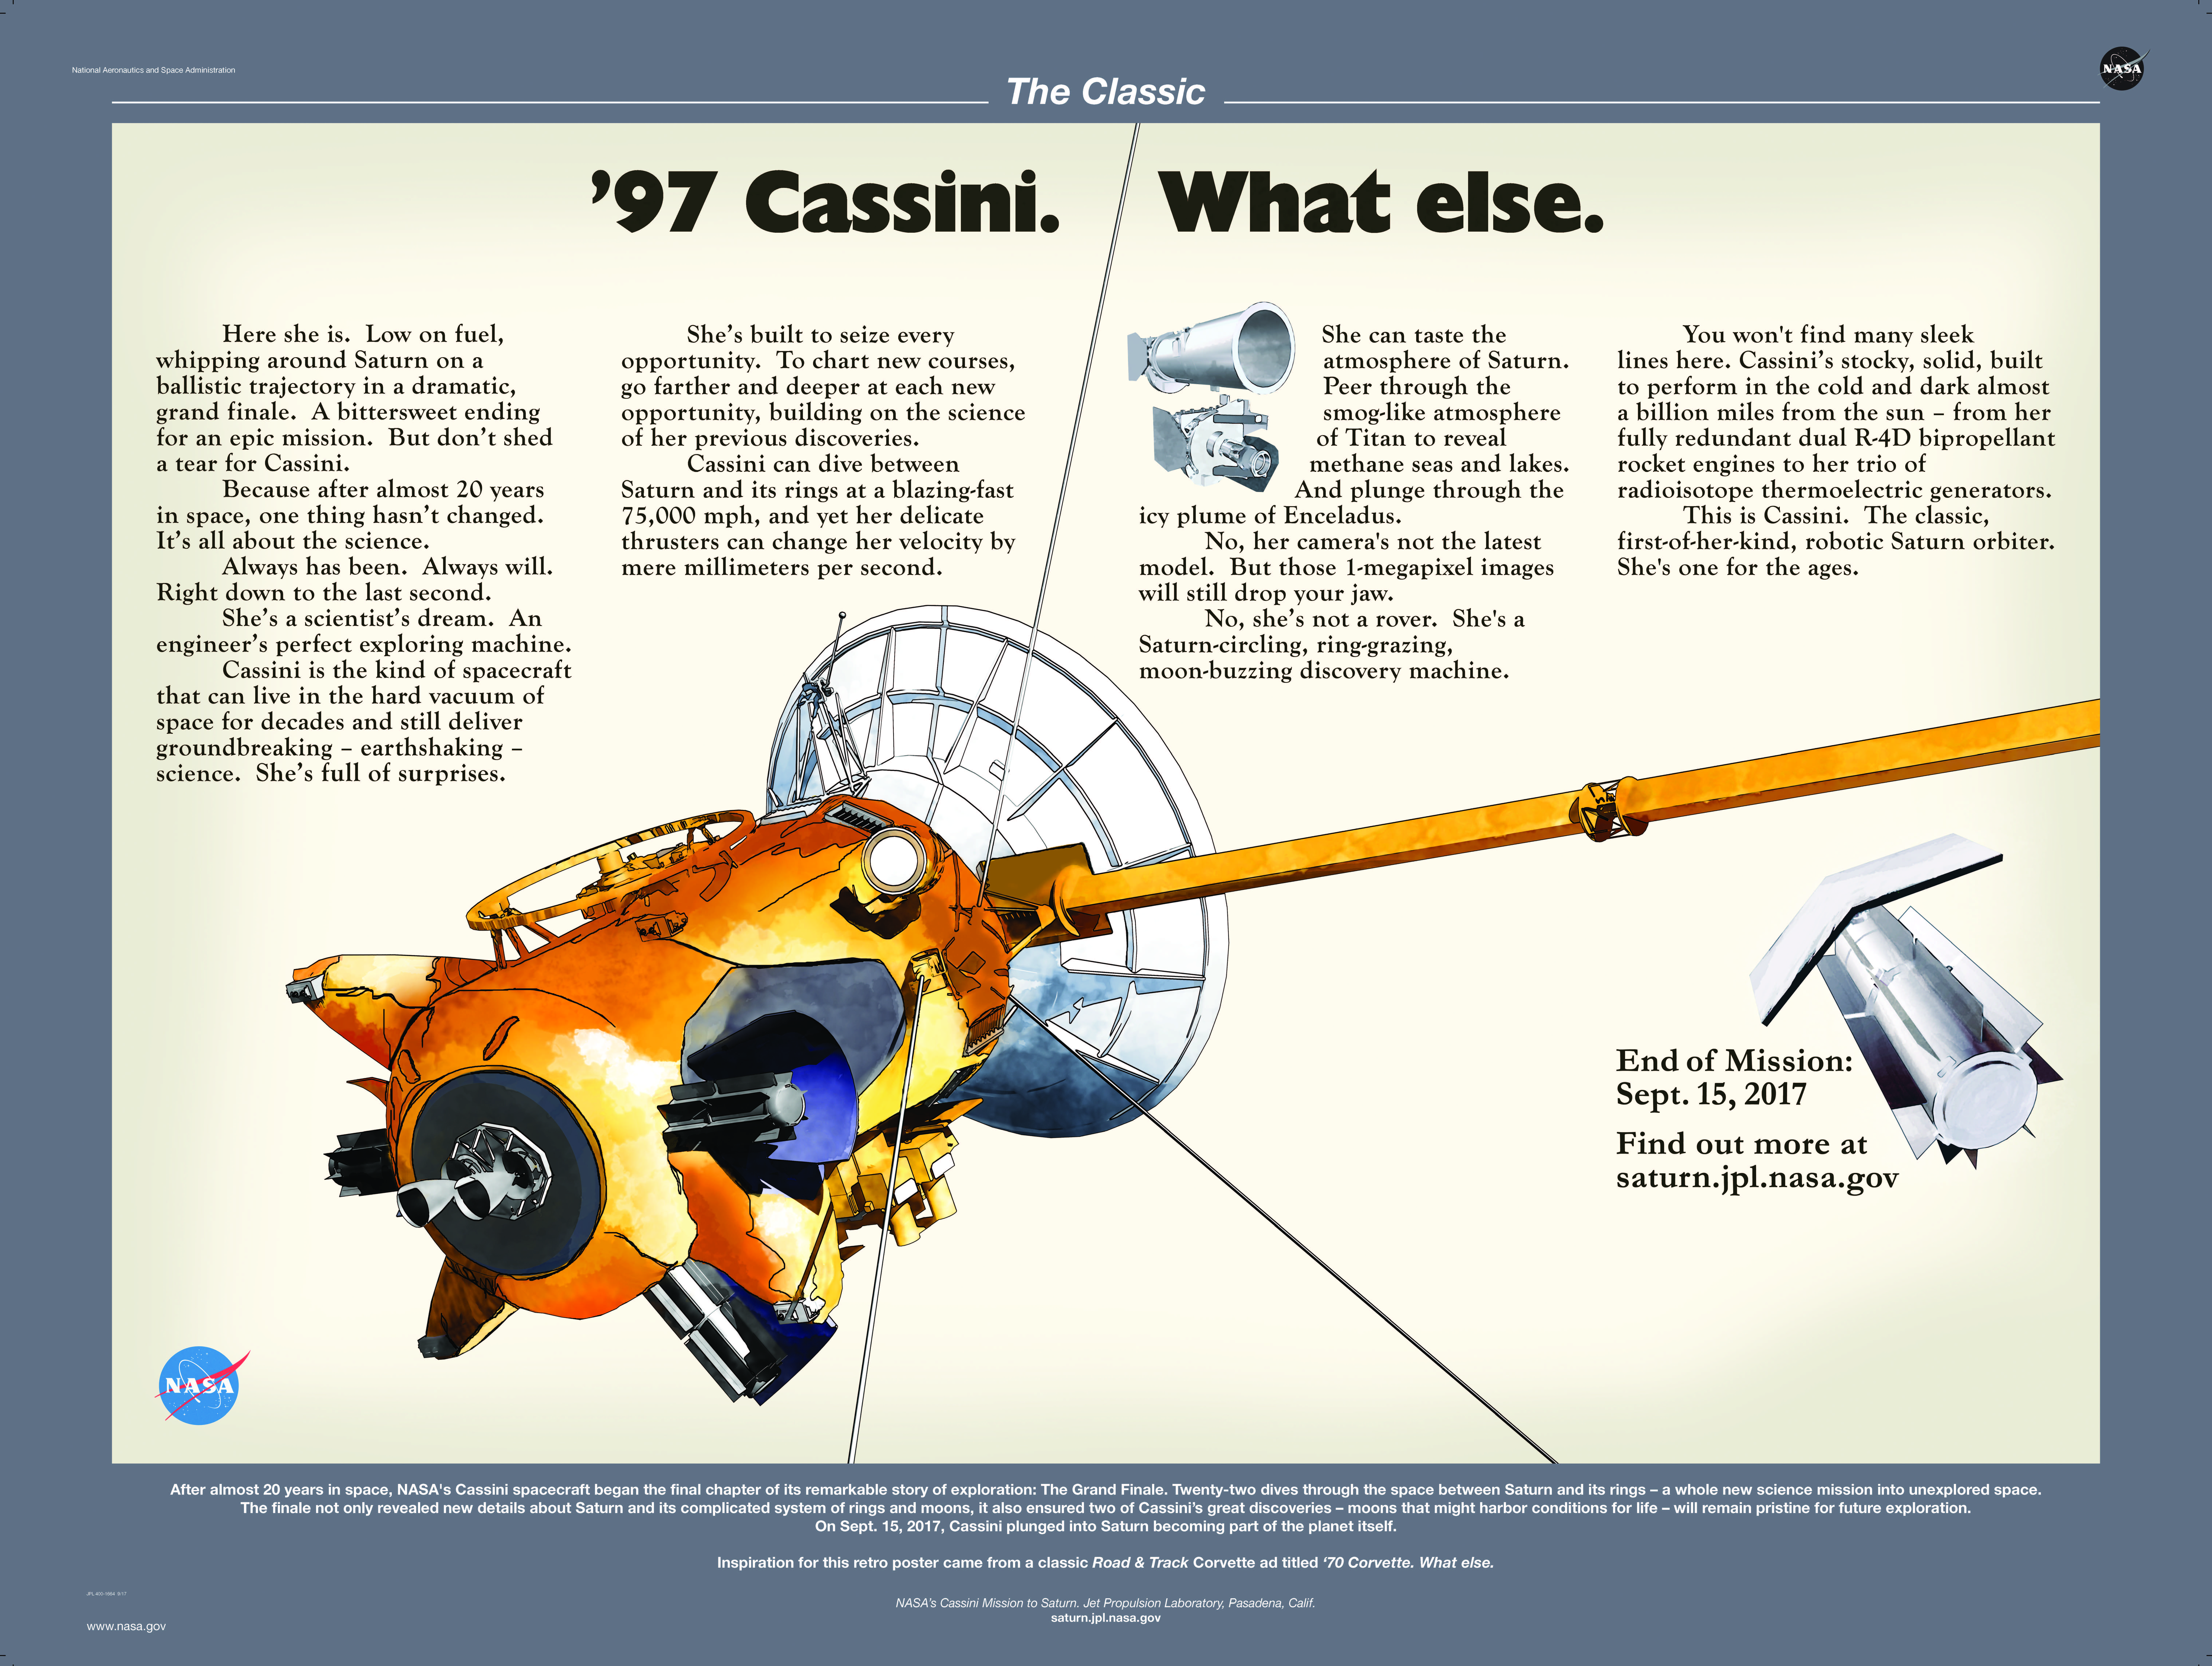 Mock advertisement describing the Cassini mission's accomplishments.